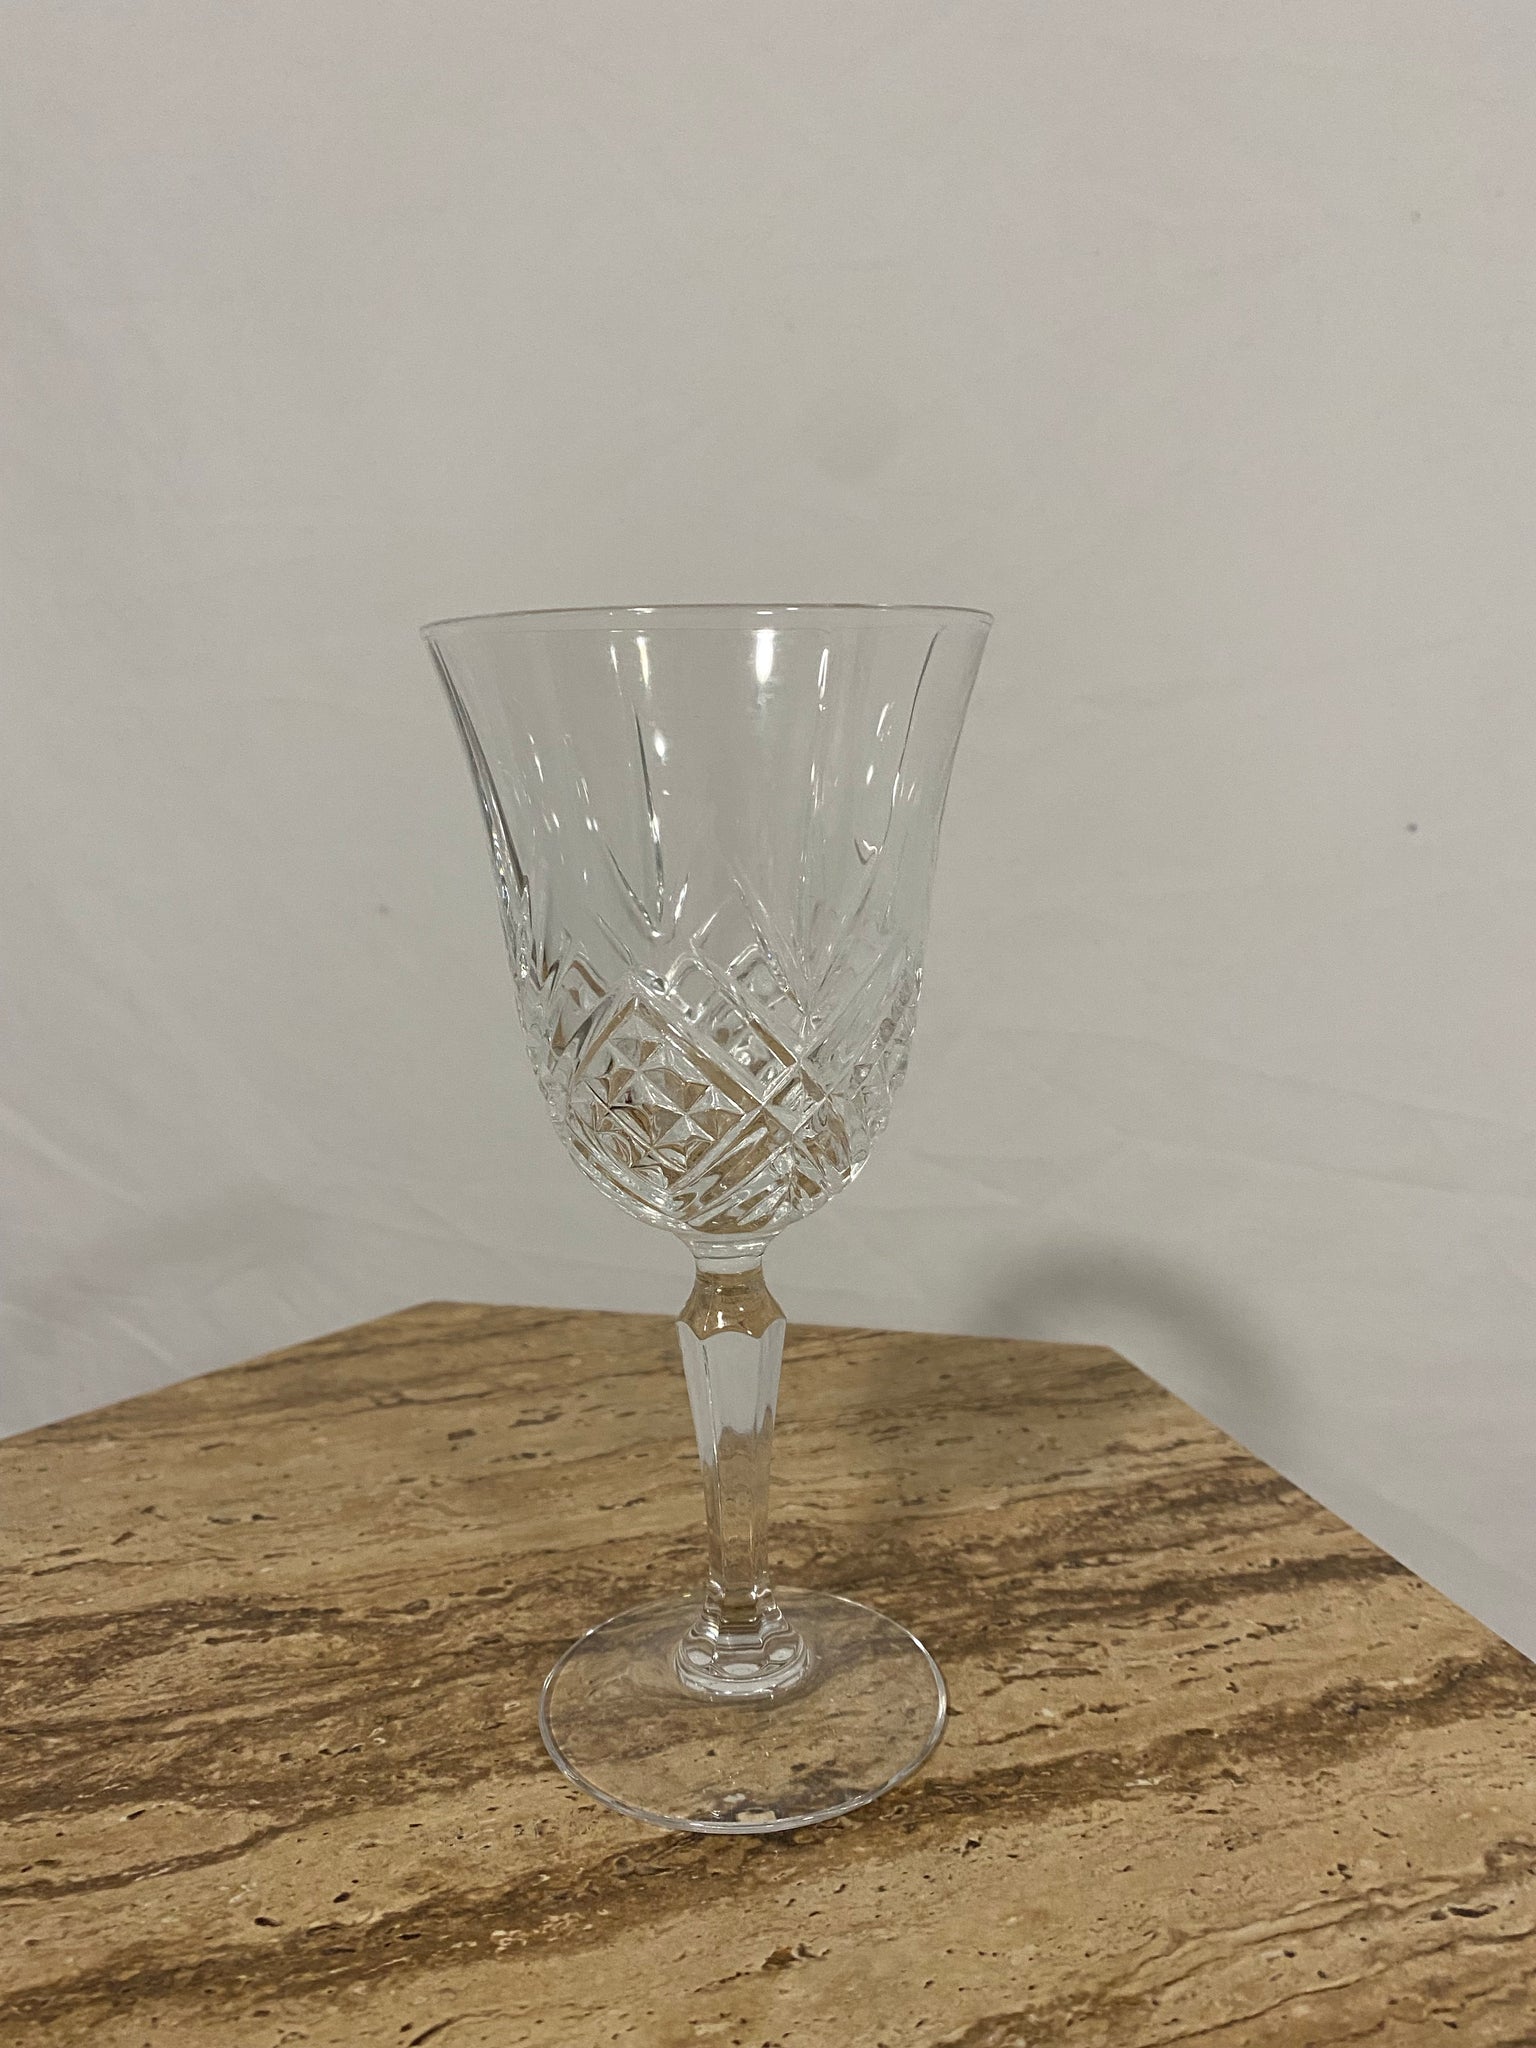 Set of 7 crystal wine glasses